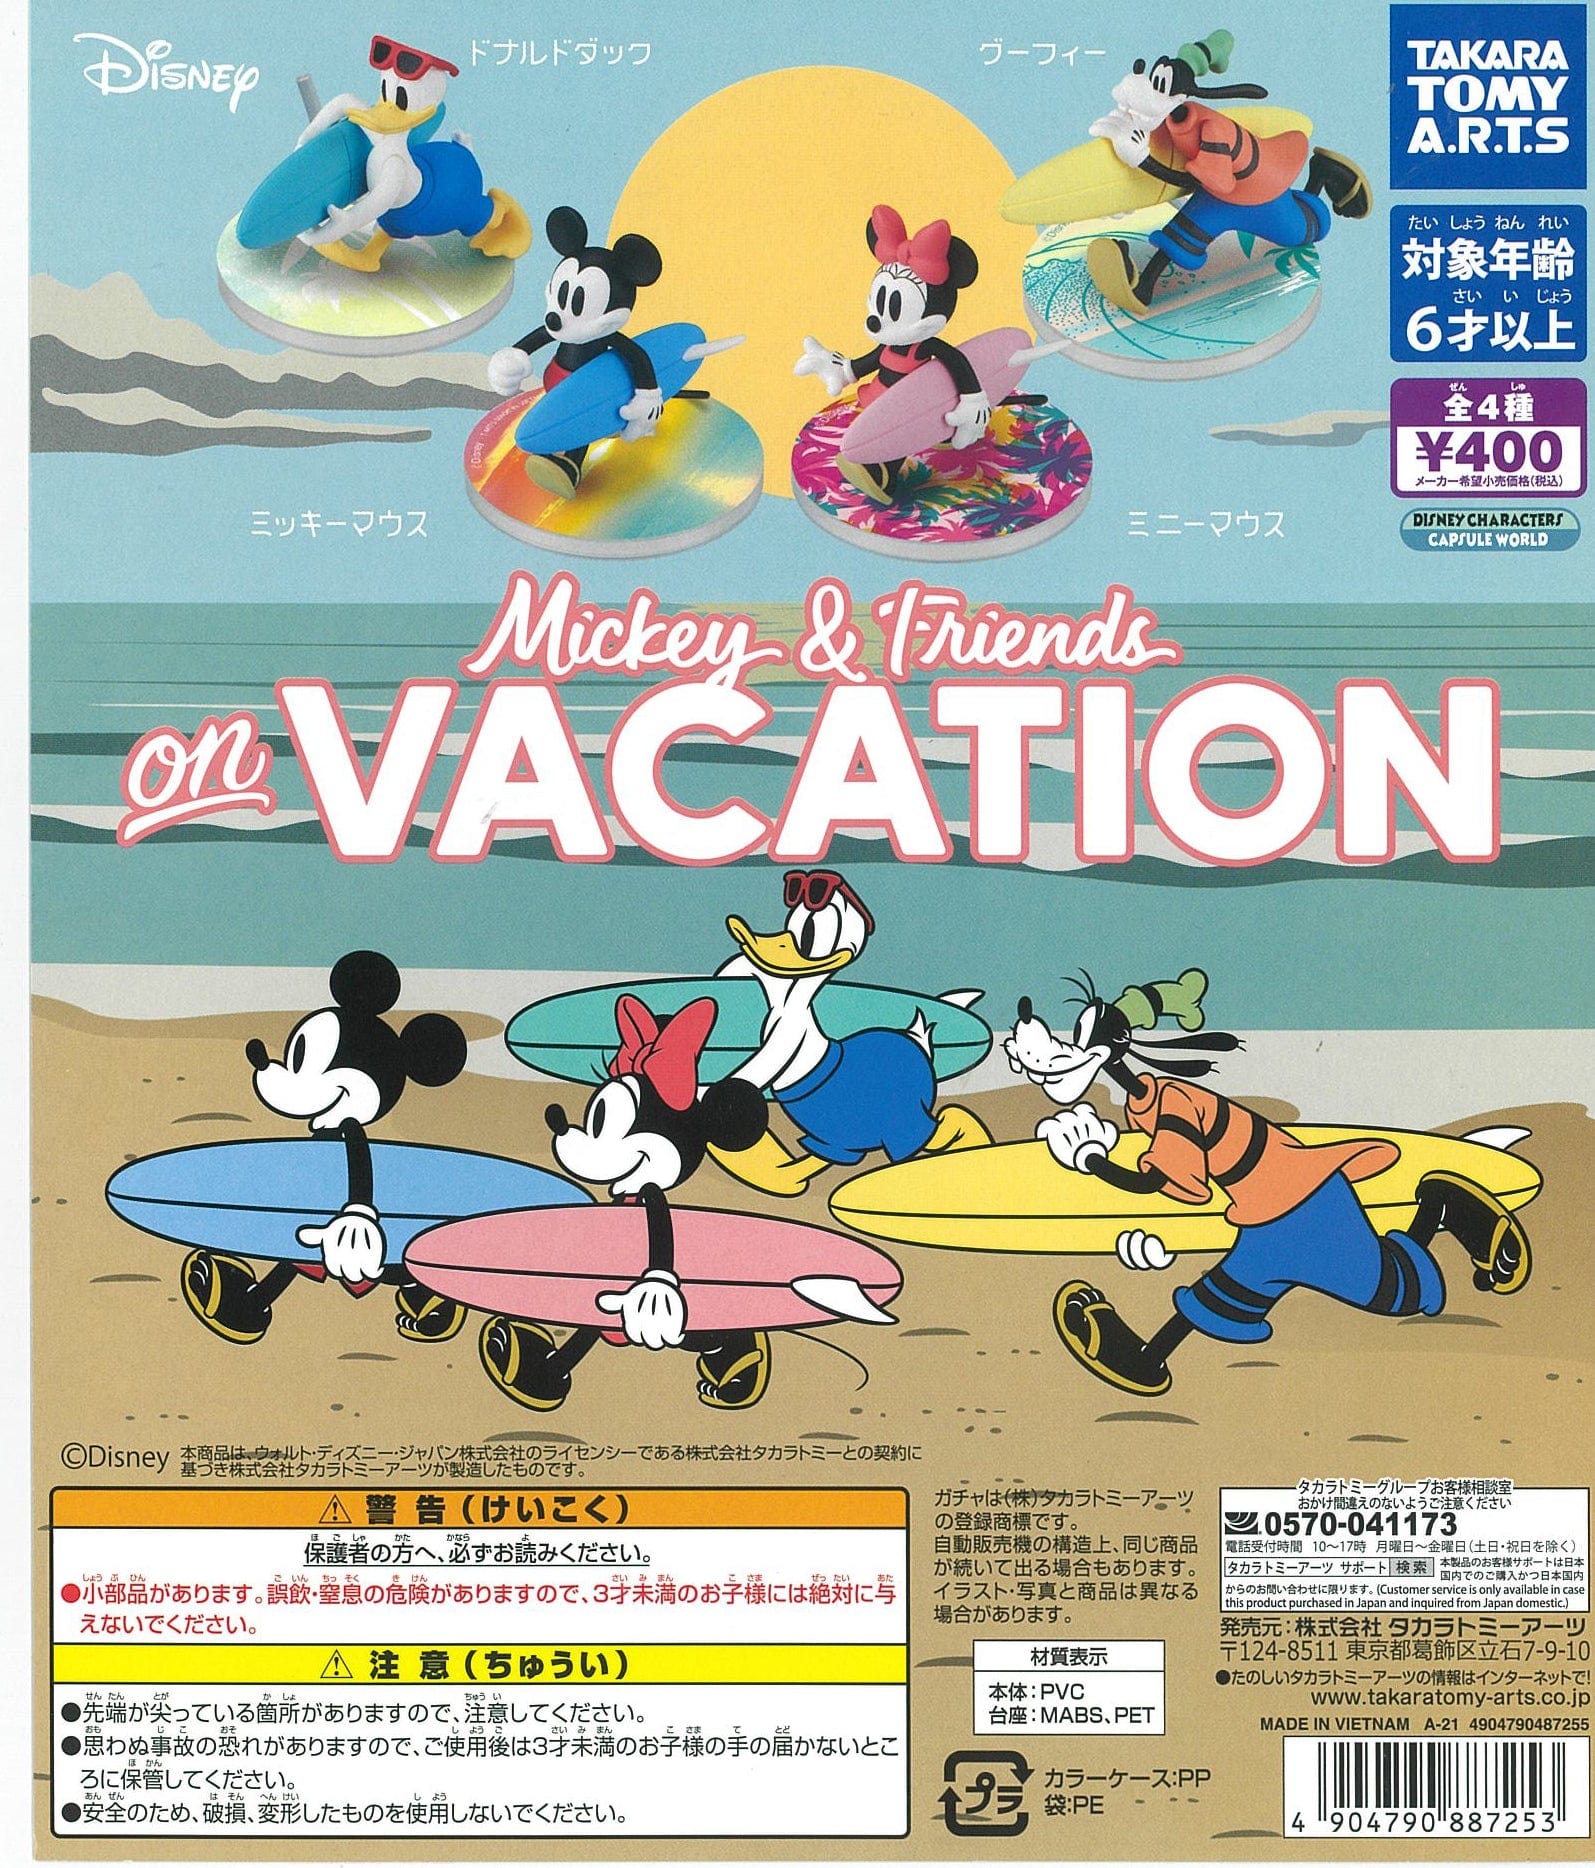 Takara Tomy A.R.T.S CP1161 Disney LOVALOT Meets Gacha Mickey & Friends on Vacation